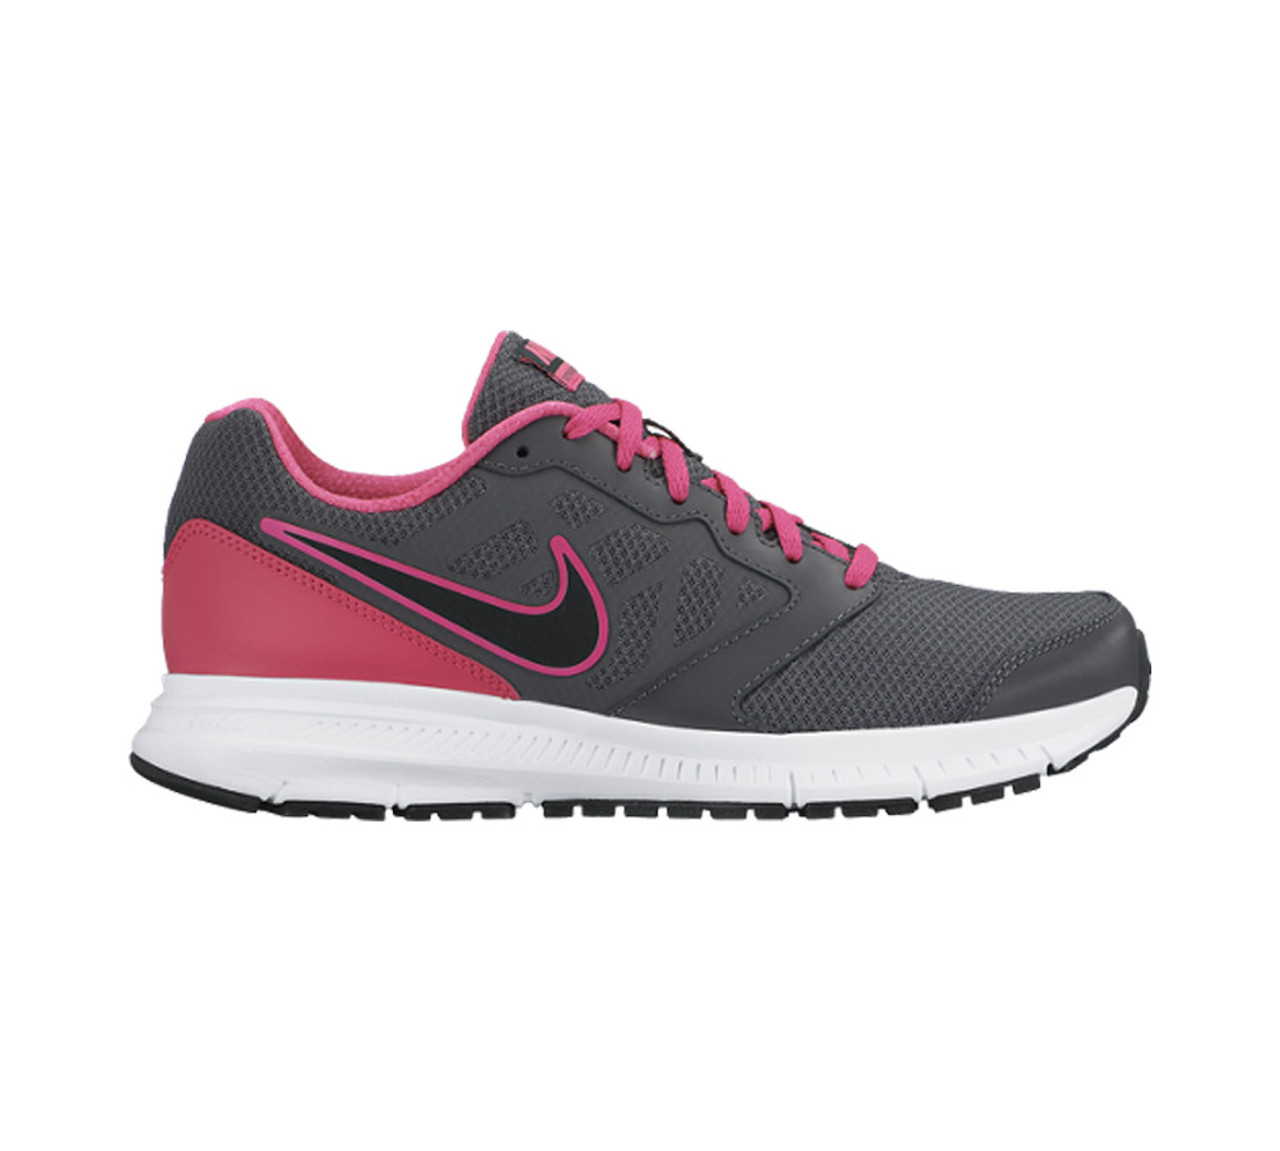 New Nike Women's Downshifter 6 Running Shoe - Grey Discount Nike Ladies Athletic & More - Shoolu.com | Shoolu.com